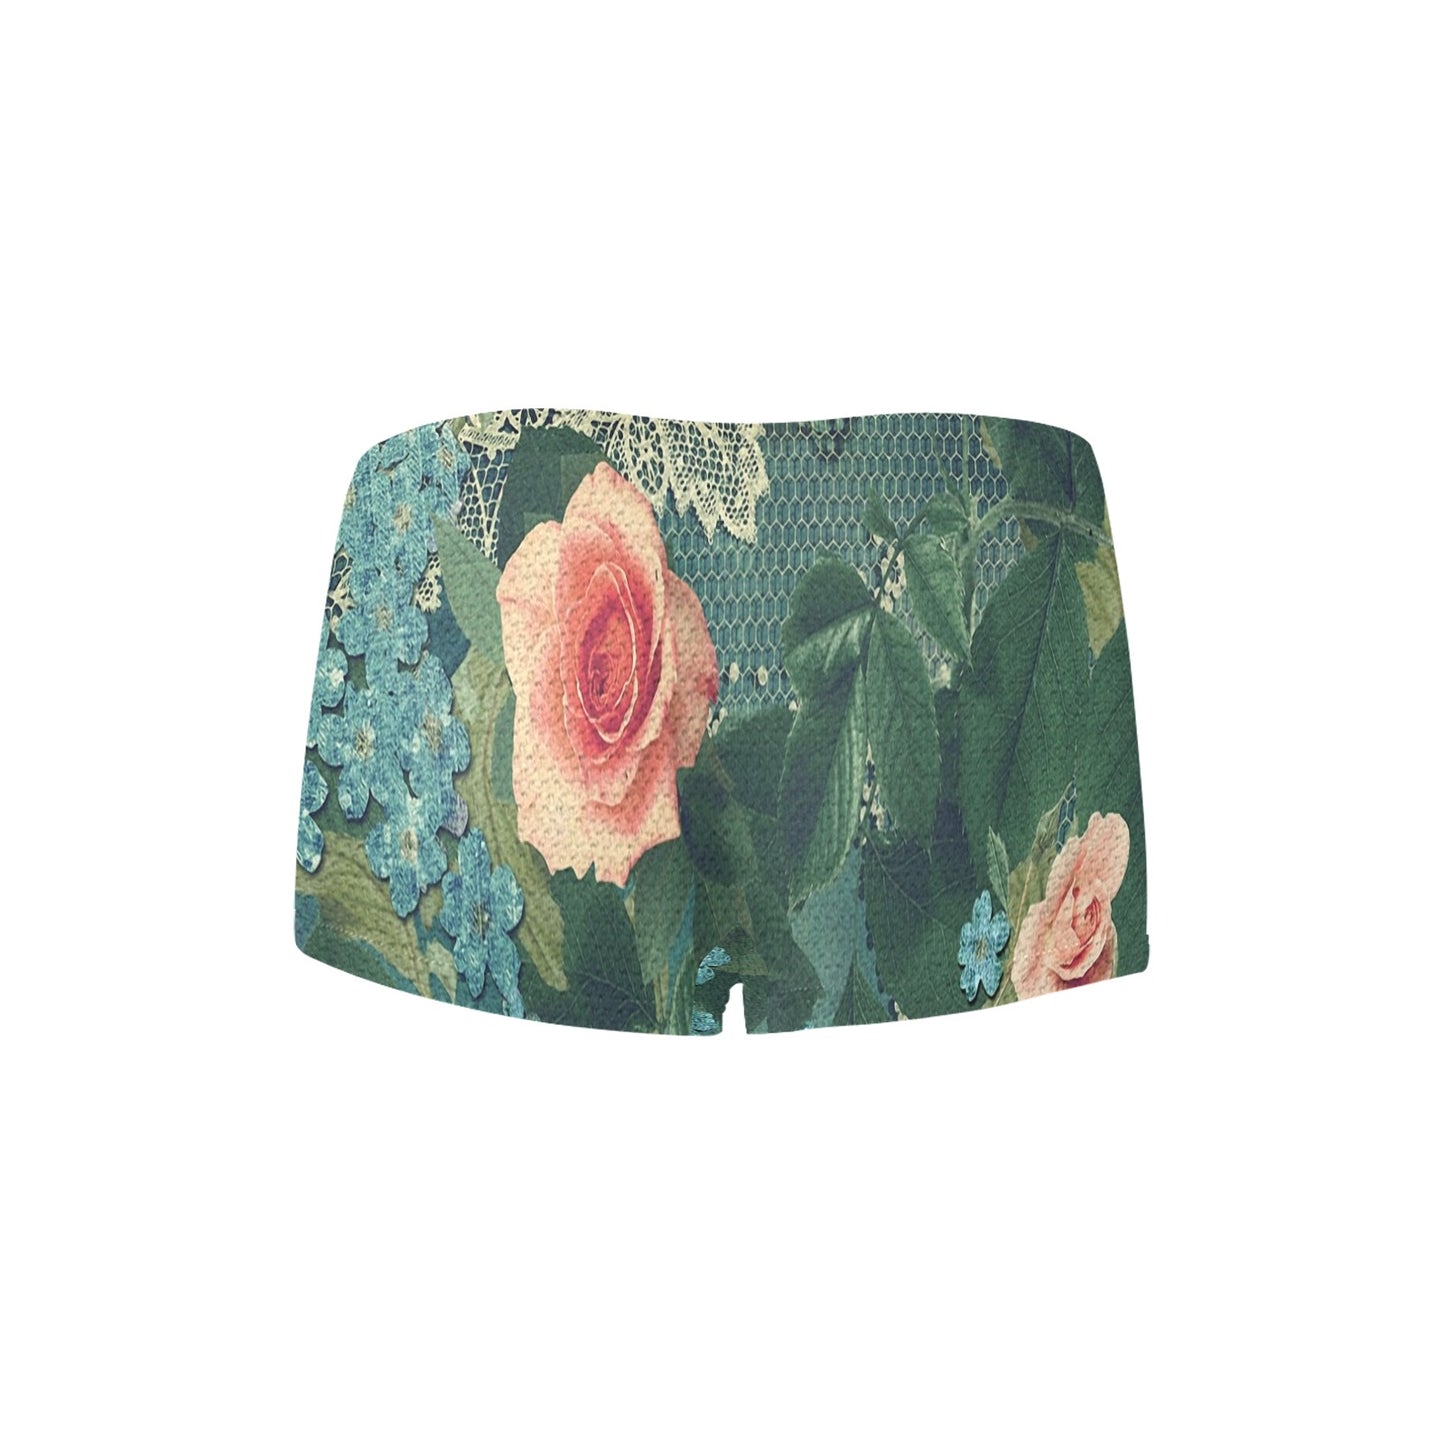 Printed Lace Boyshorts, daisy dukes, pum pum shorts, shortie shorts , design 01